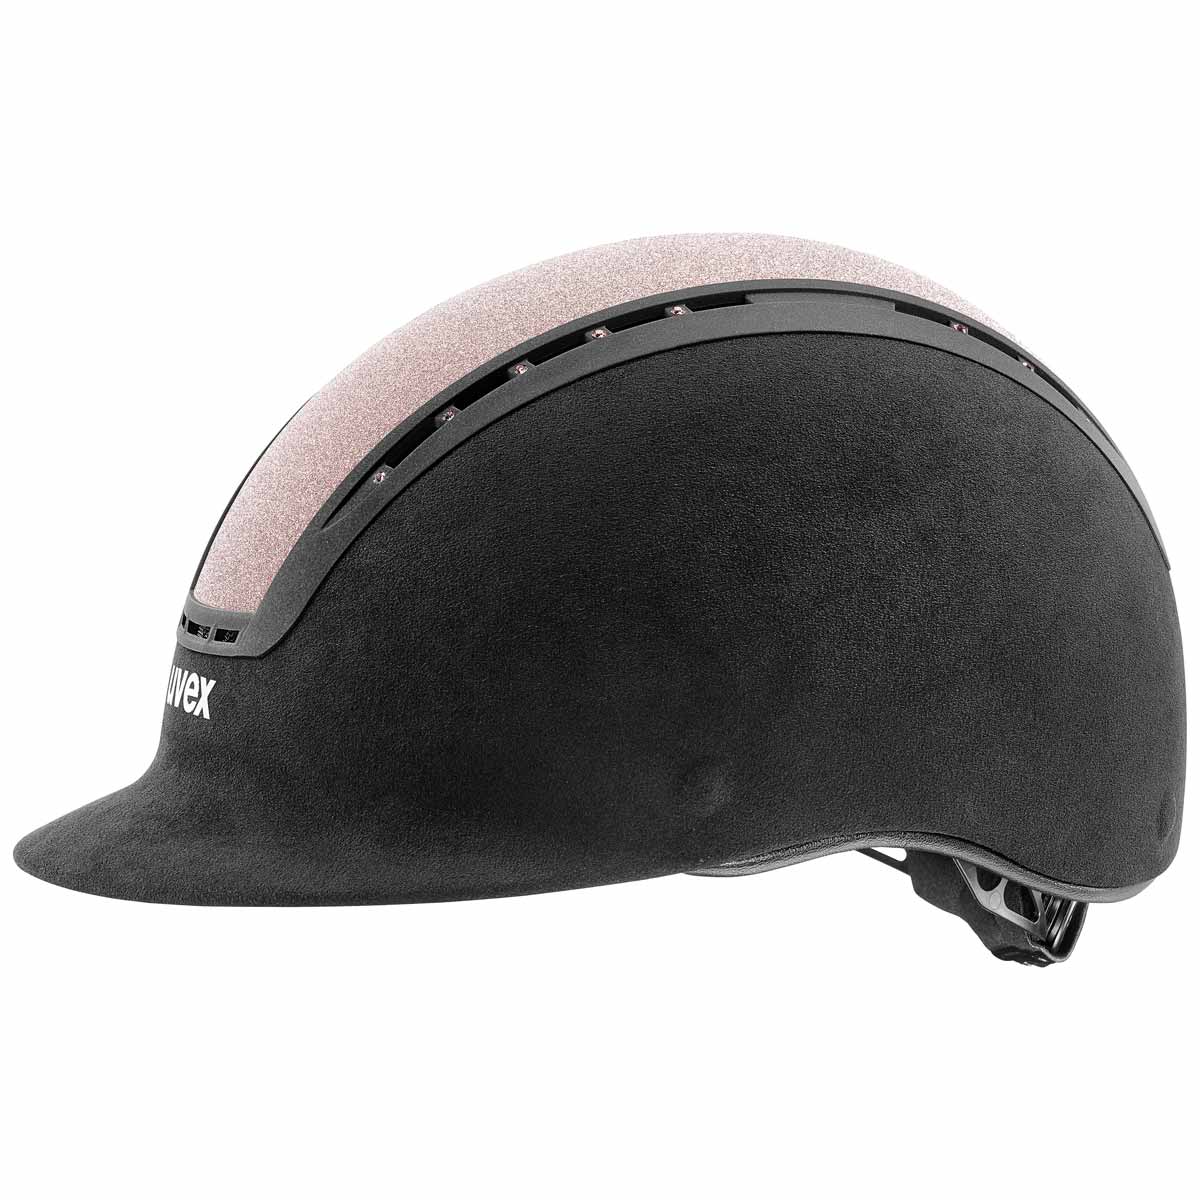 uvex suxxeed glamour riding helmet black XS/S